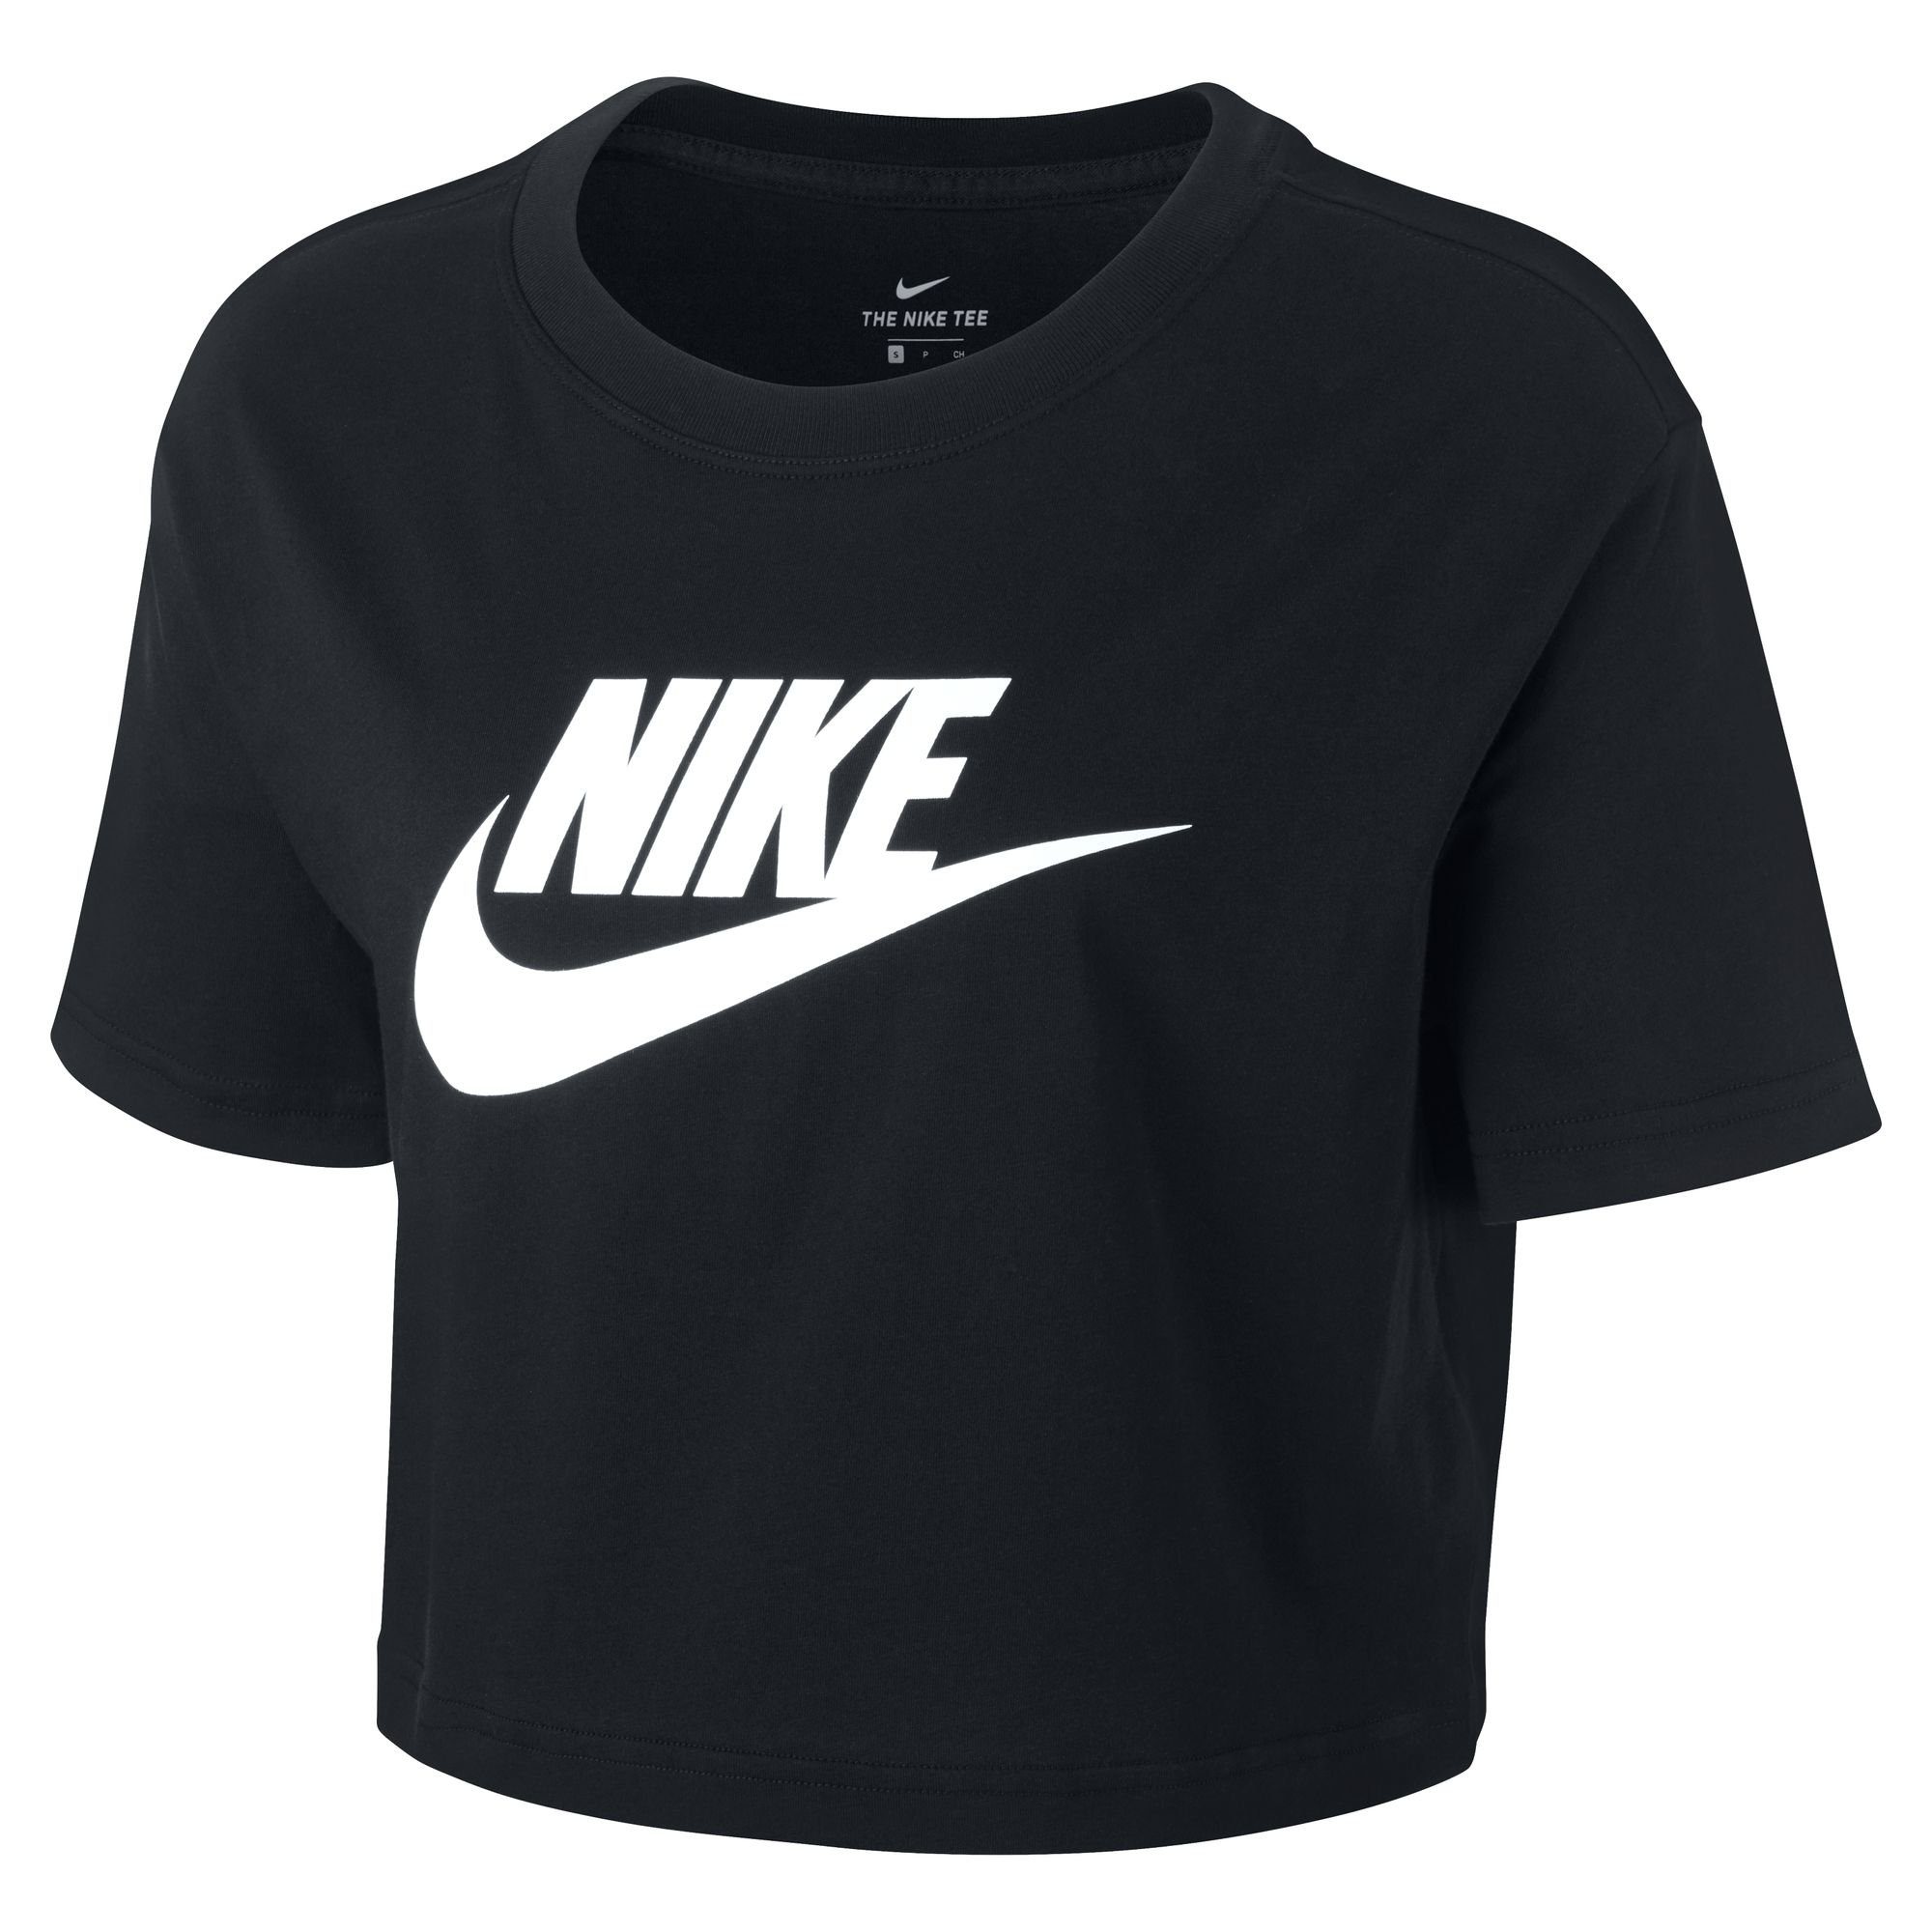 CROPPED WOMEN'S LOGO Nike T-SHIRT ESSENTIAL T-Shirt Sportswear schwarzweiss